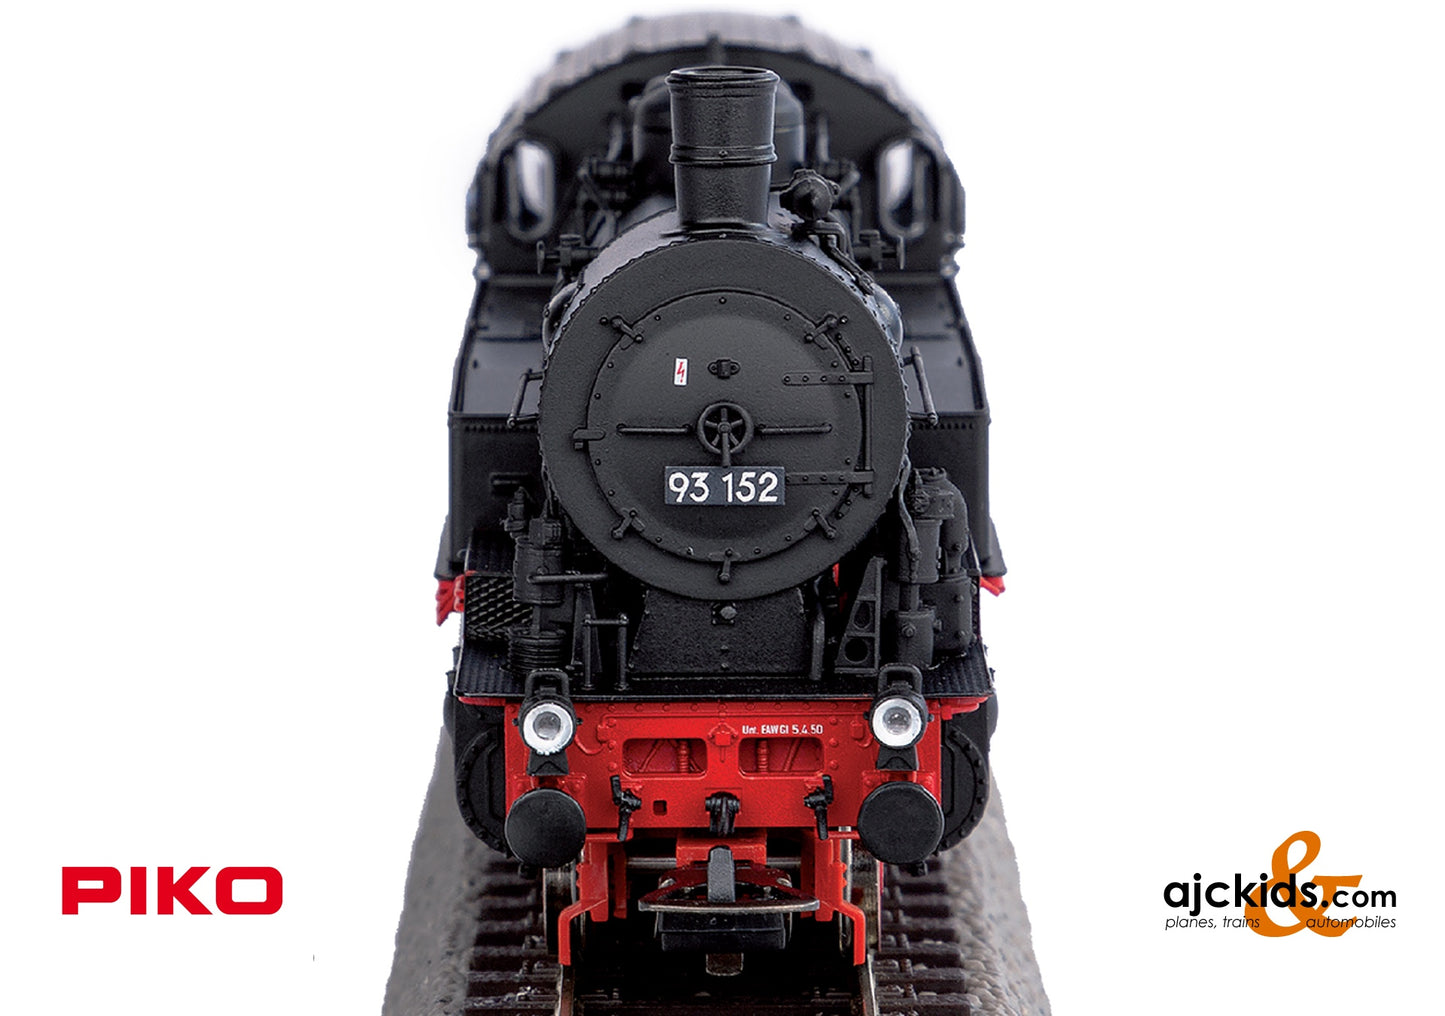 Piko 50653 - BR 93.0 Steam Locomotive DB III Sound